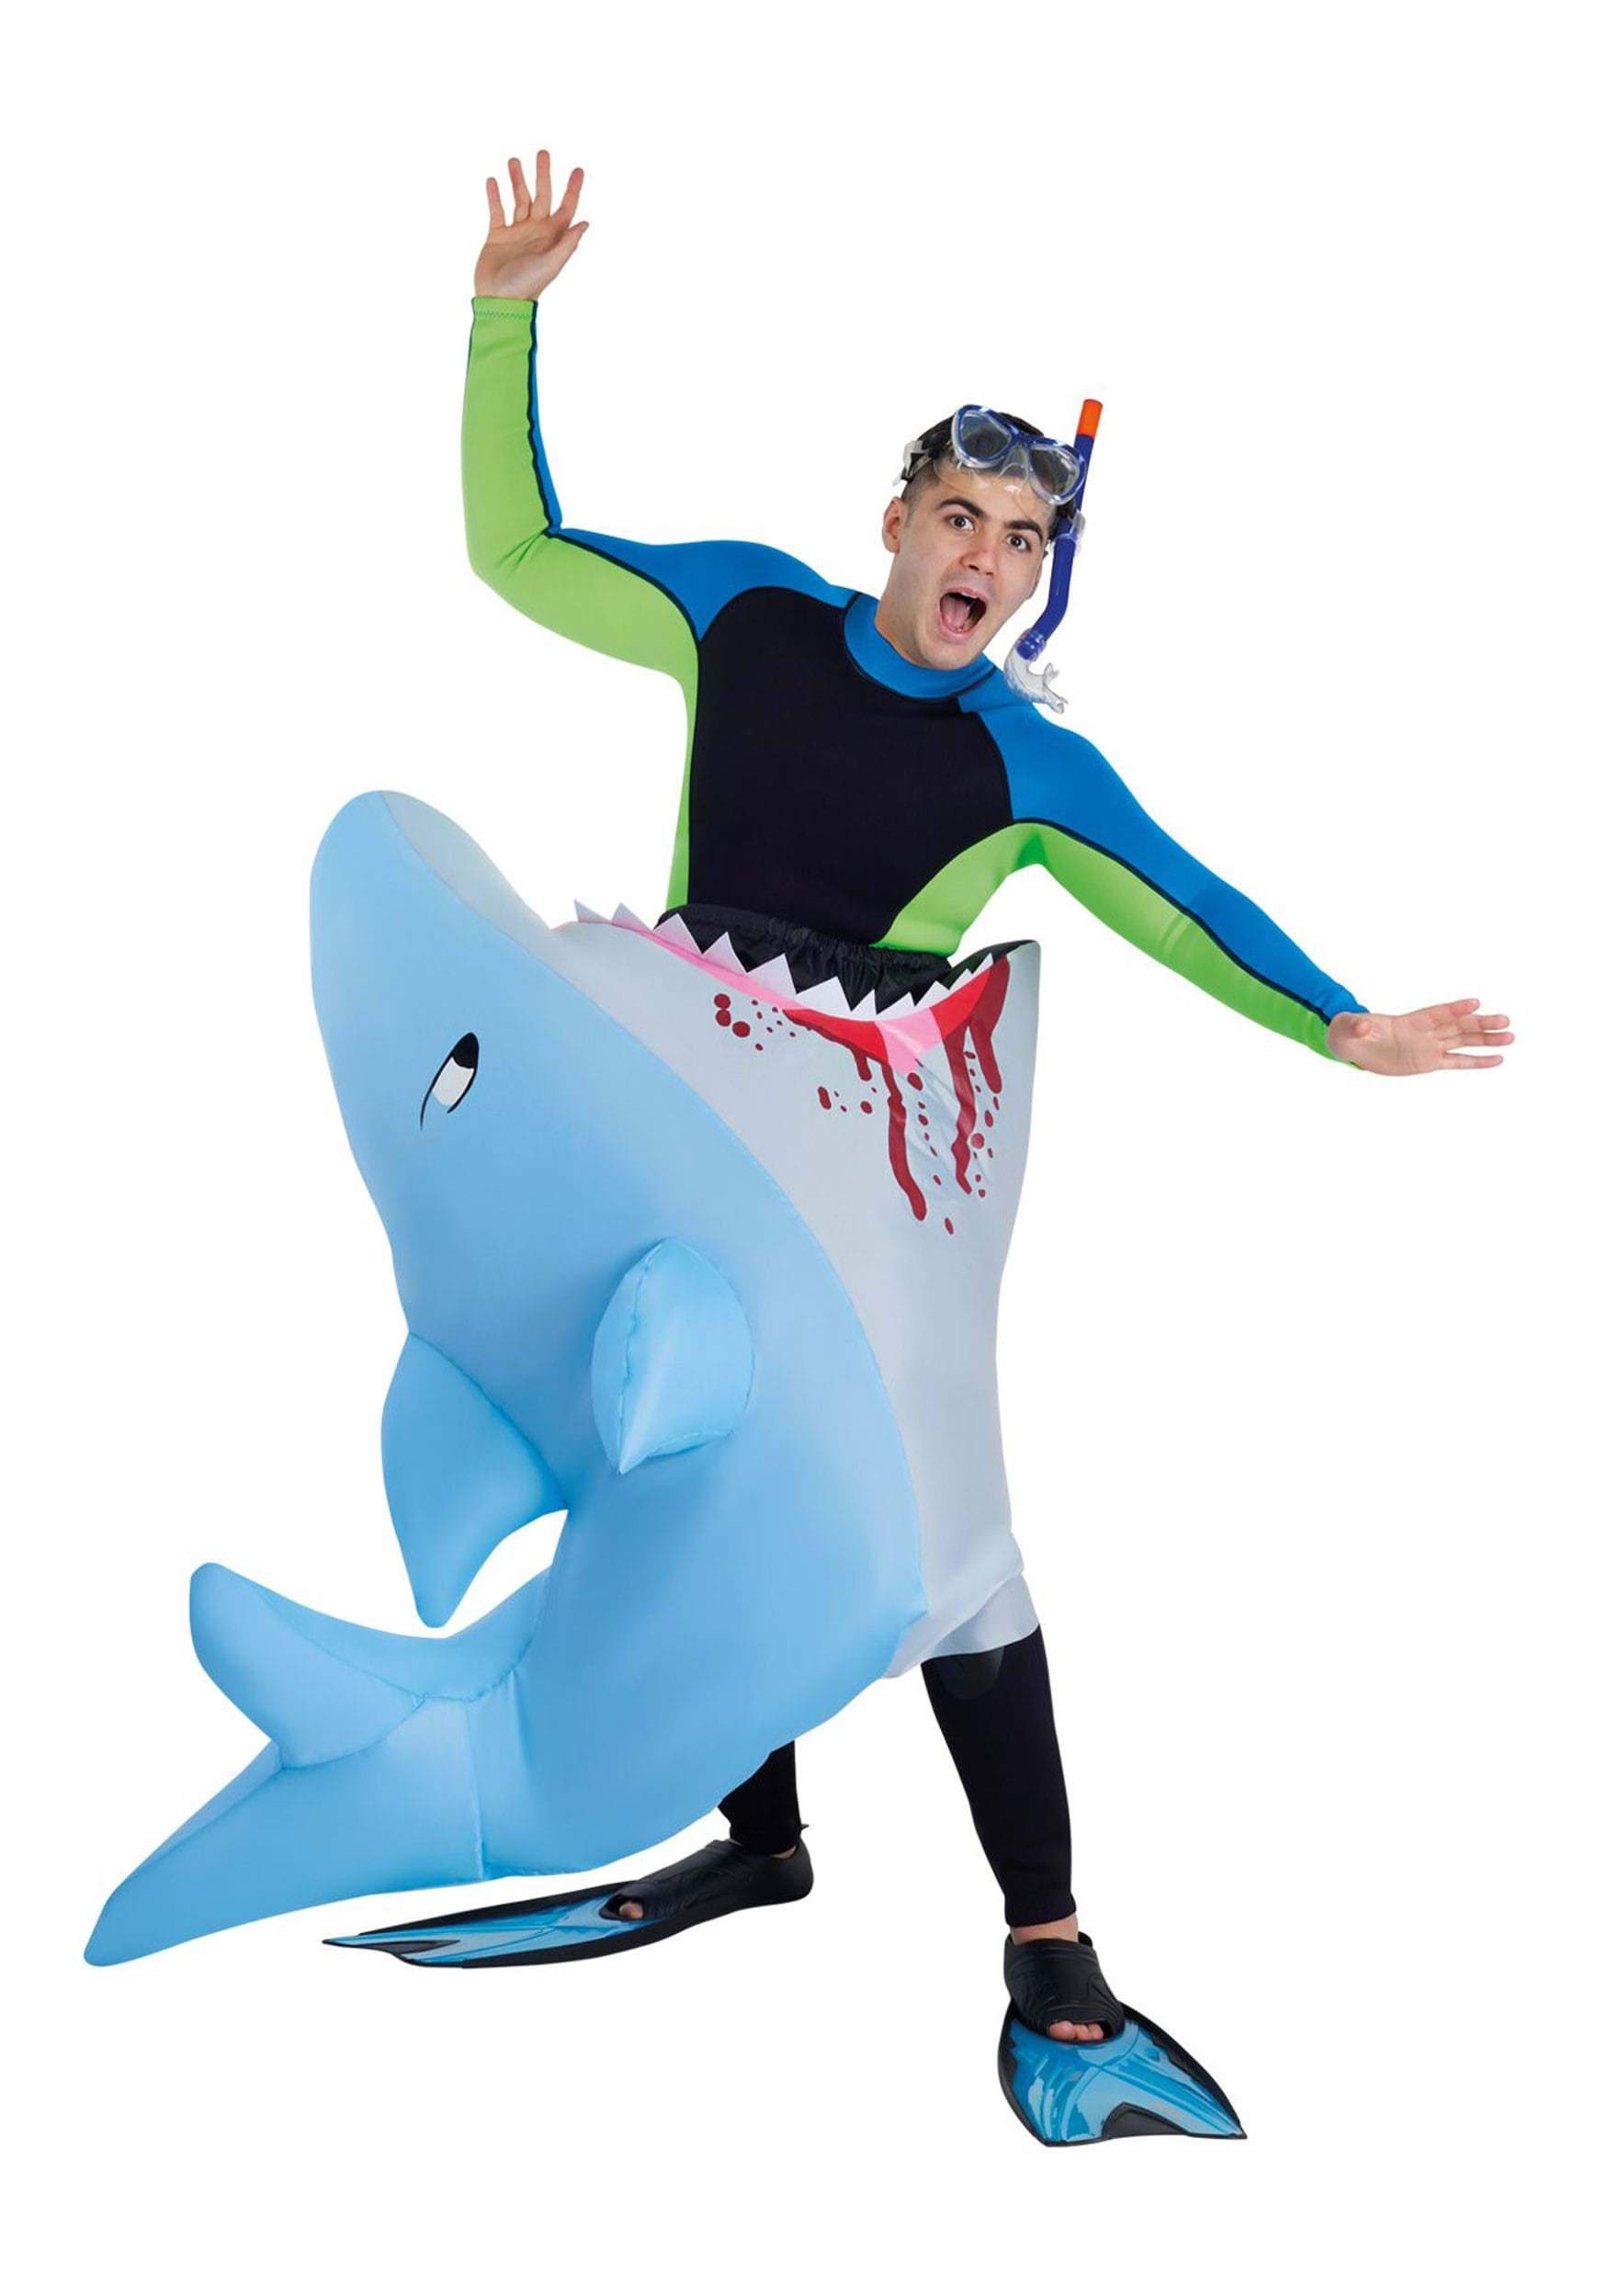 19.) Adult Man Eating Inflatable Shark